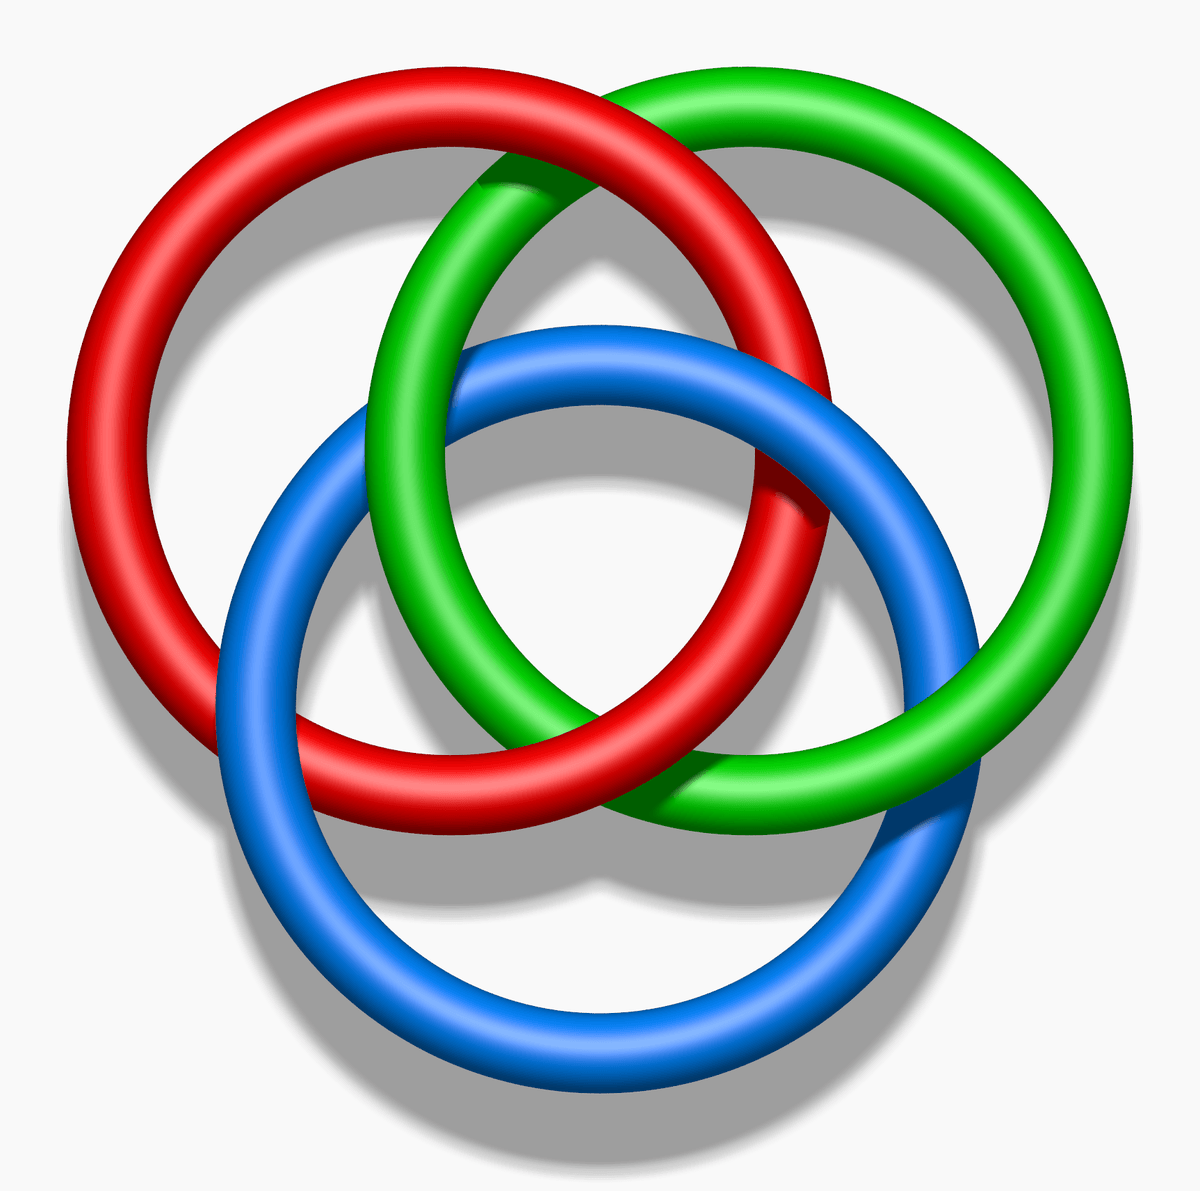 Interlocking Circles Logo - Borromean rings